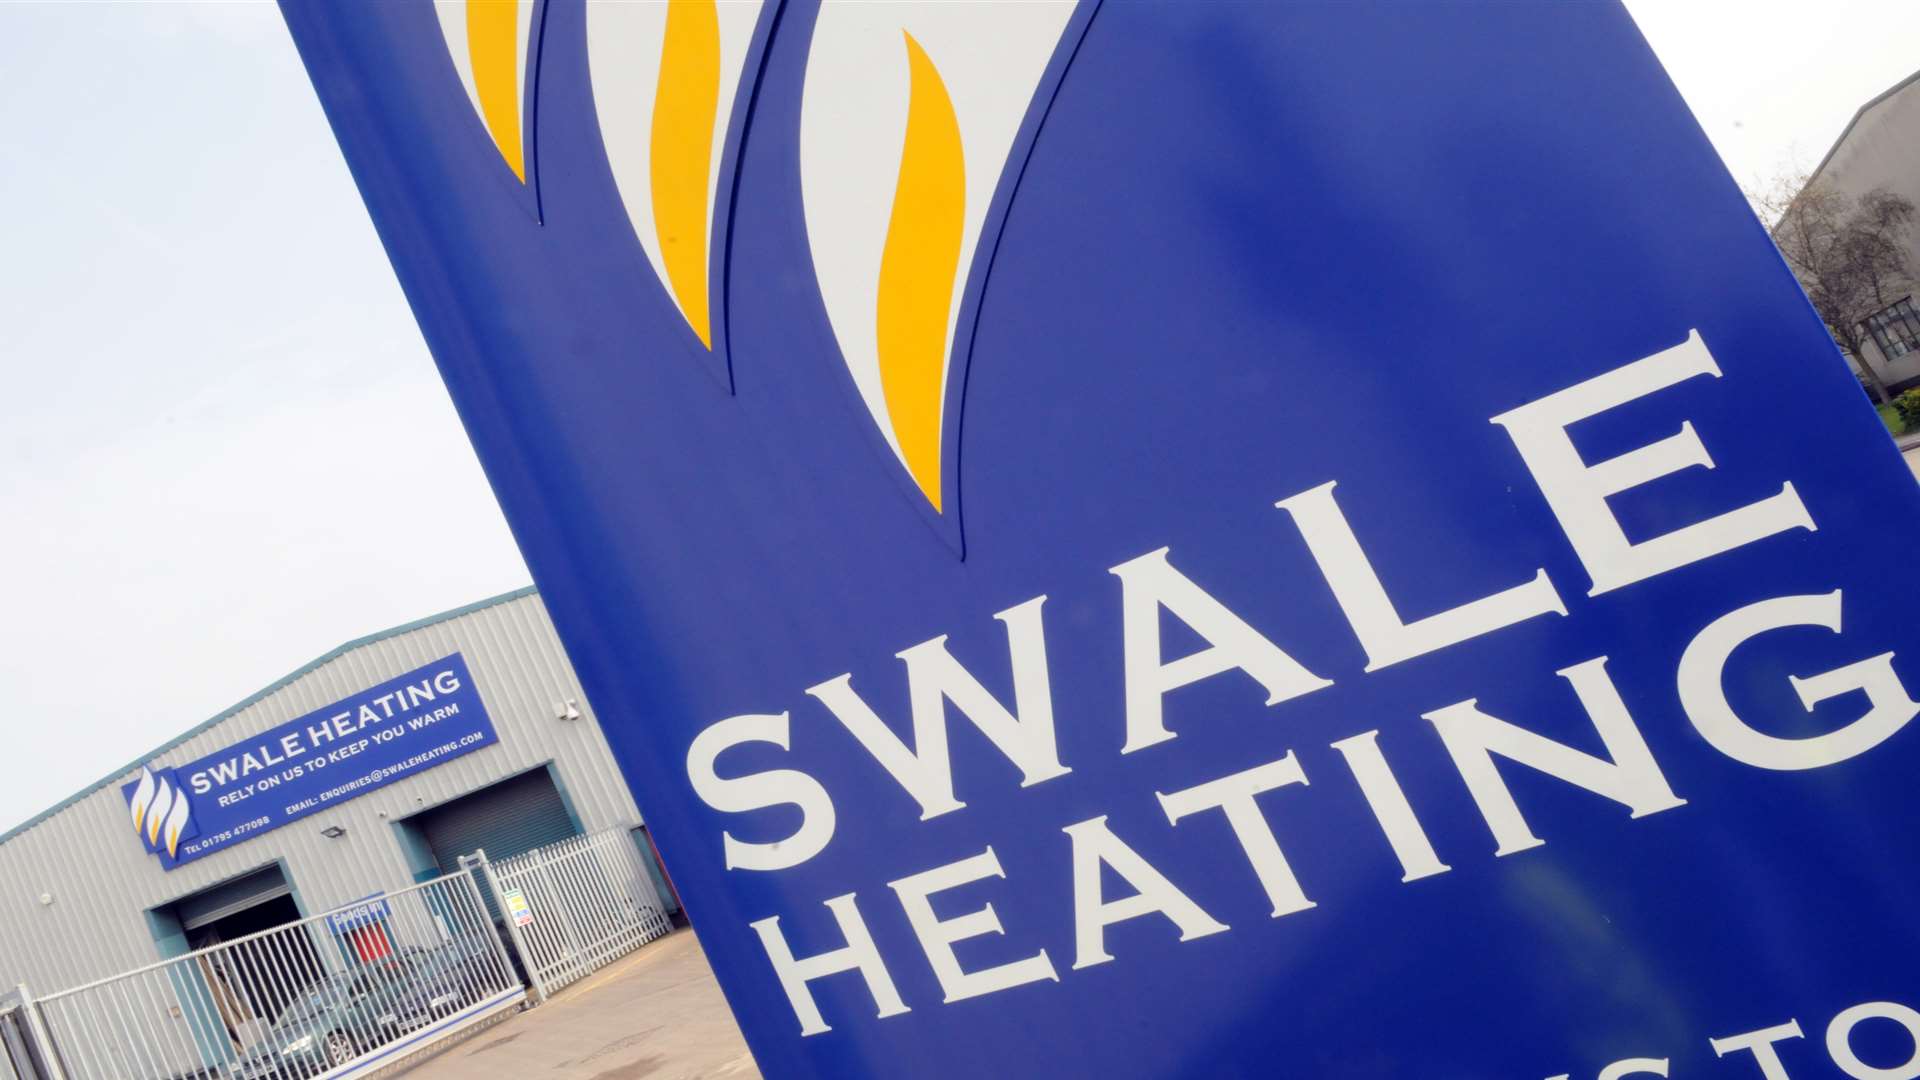 Swale Heating's headquarters in Sittingbourne